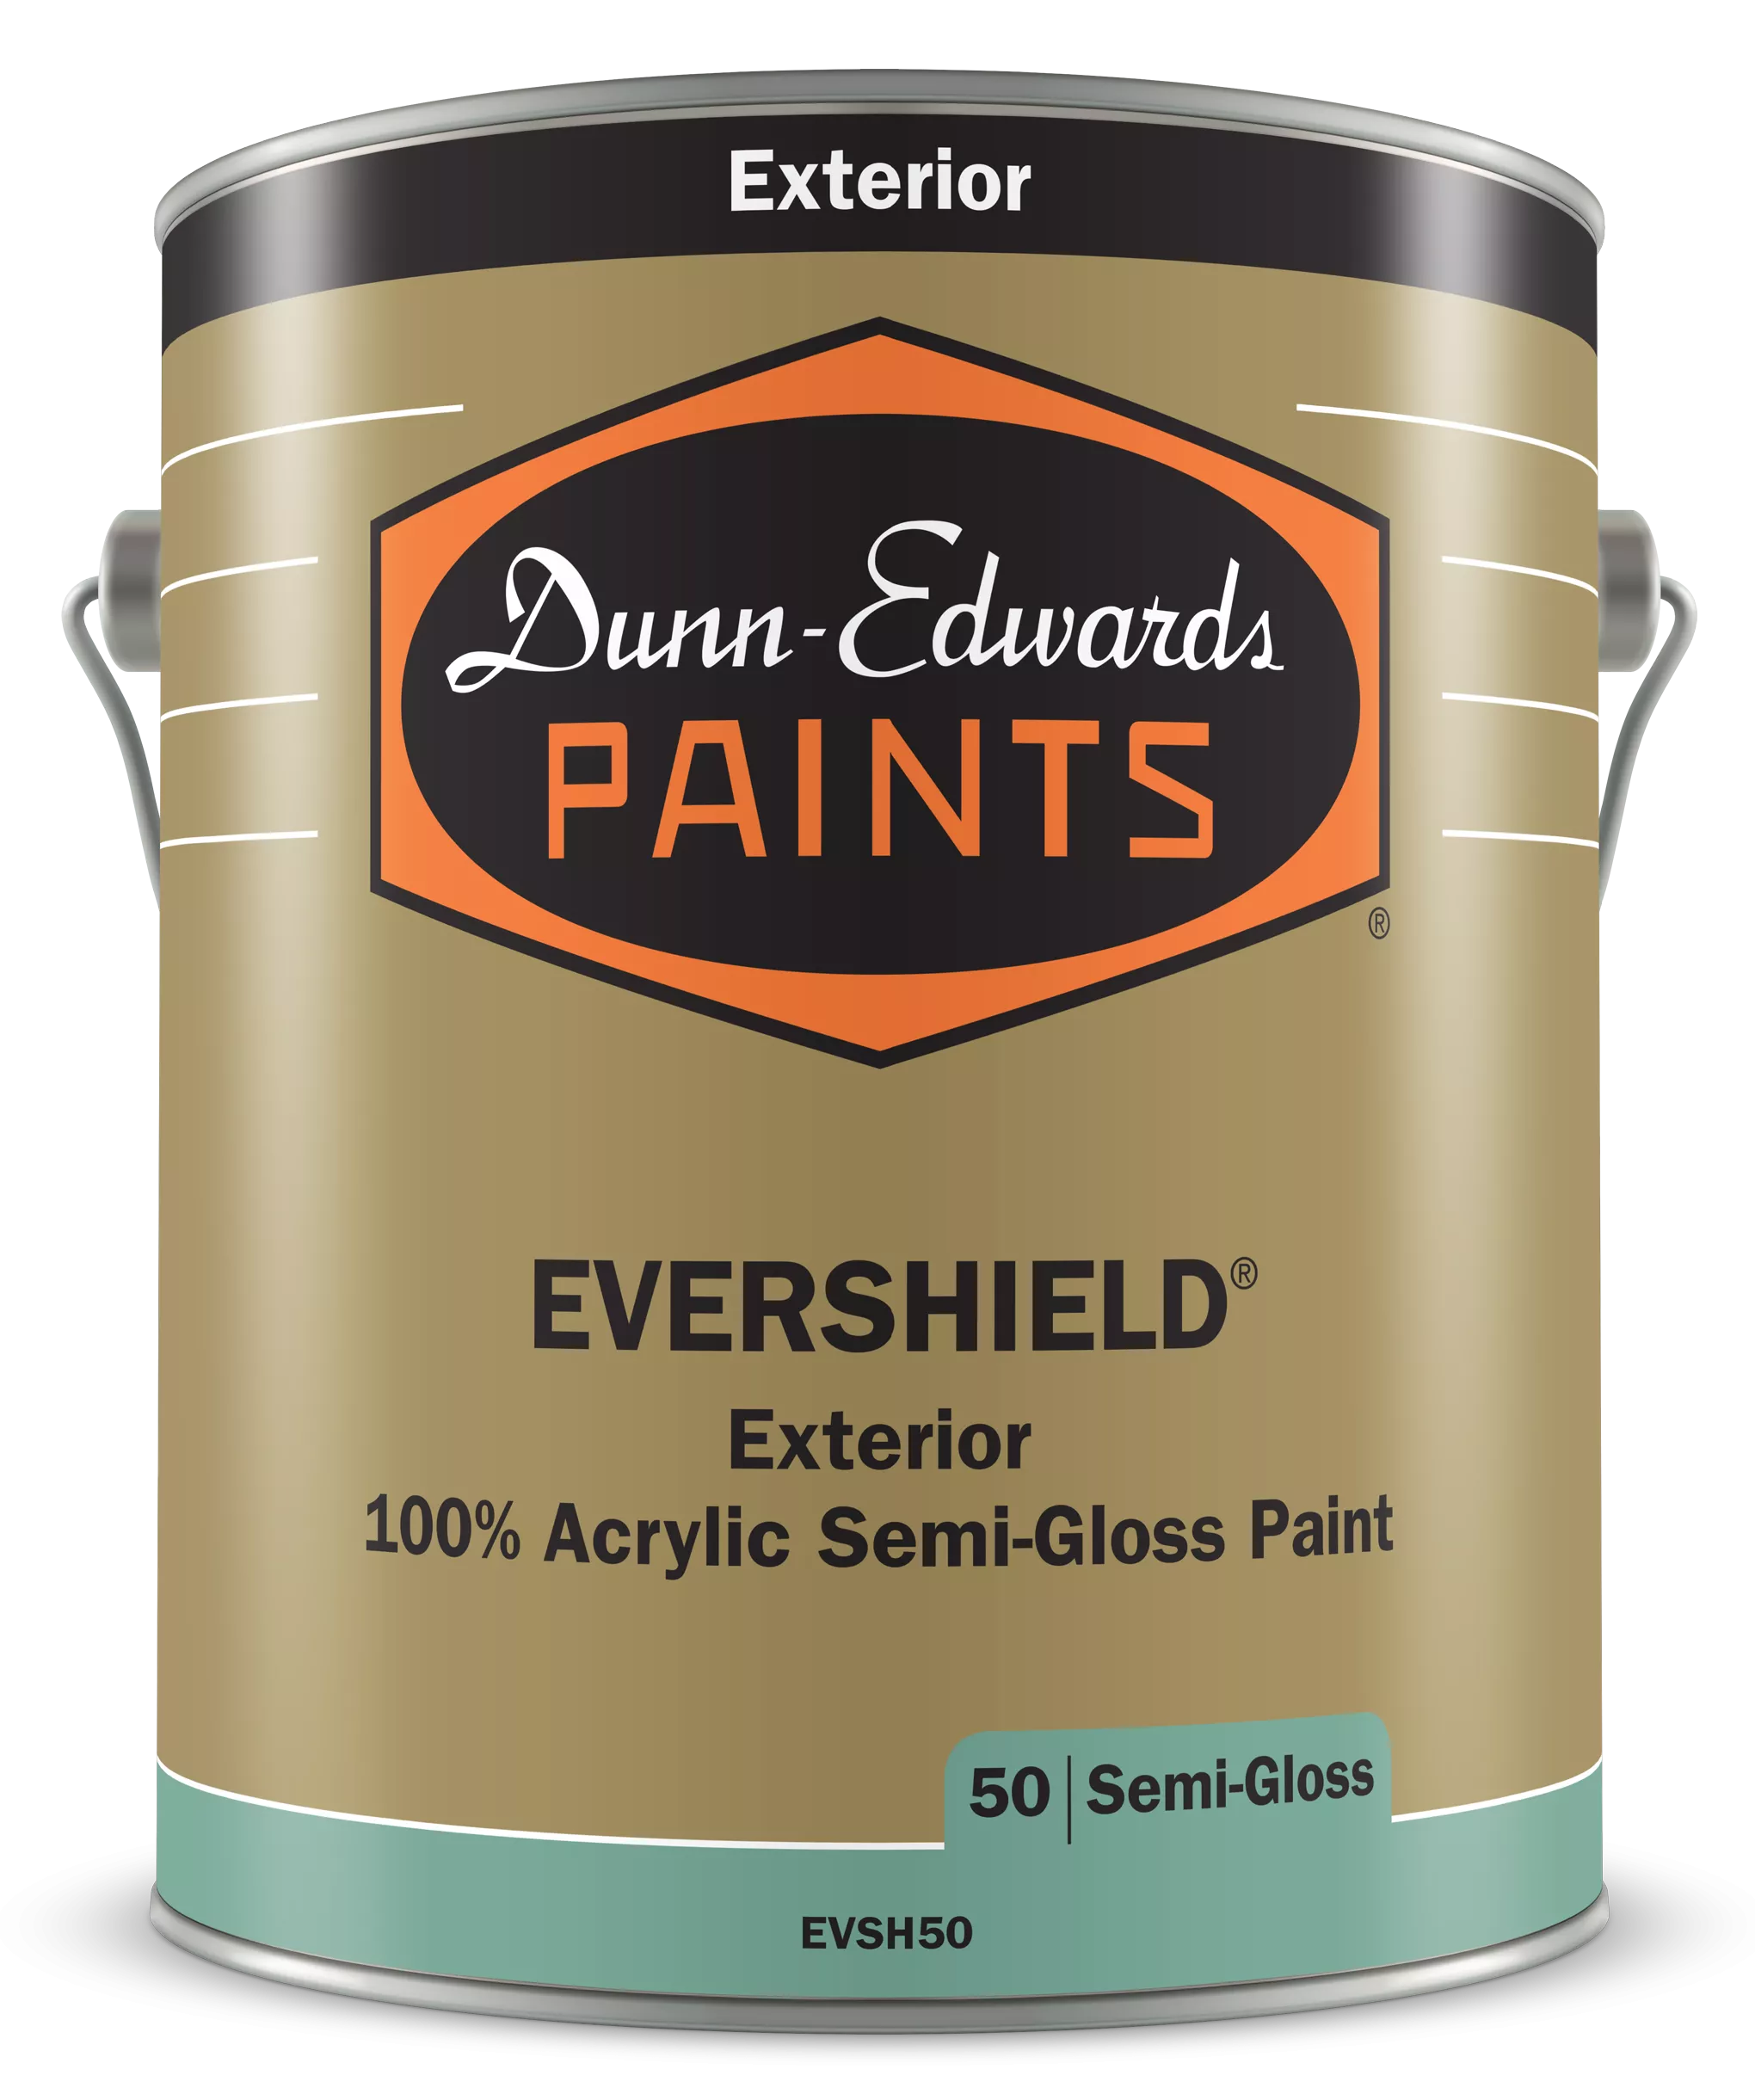 EVERSHIELD Exterior 100% Acrylic Semi-Gloss Paint Can